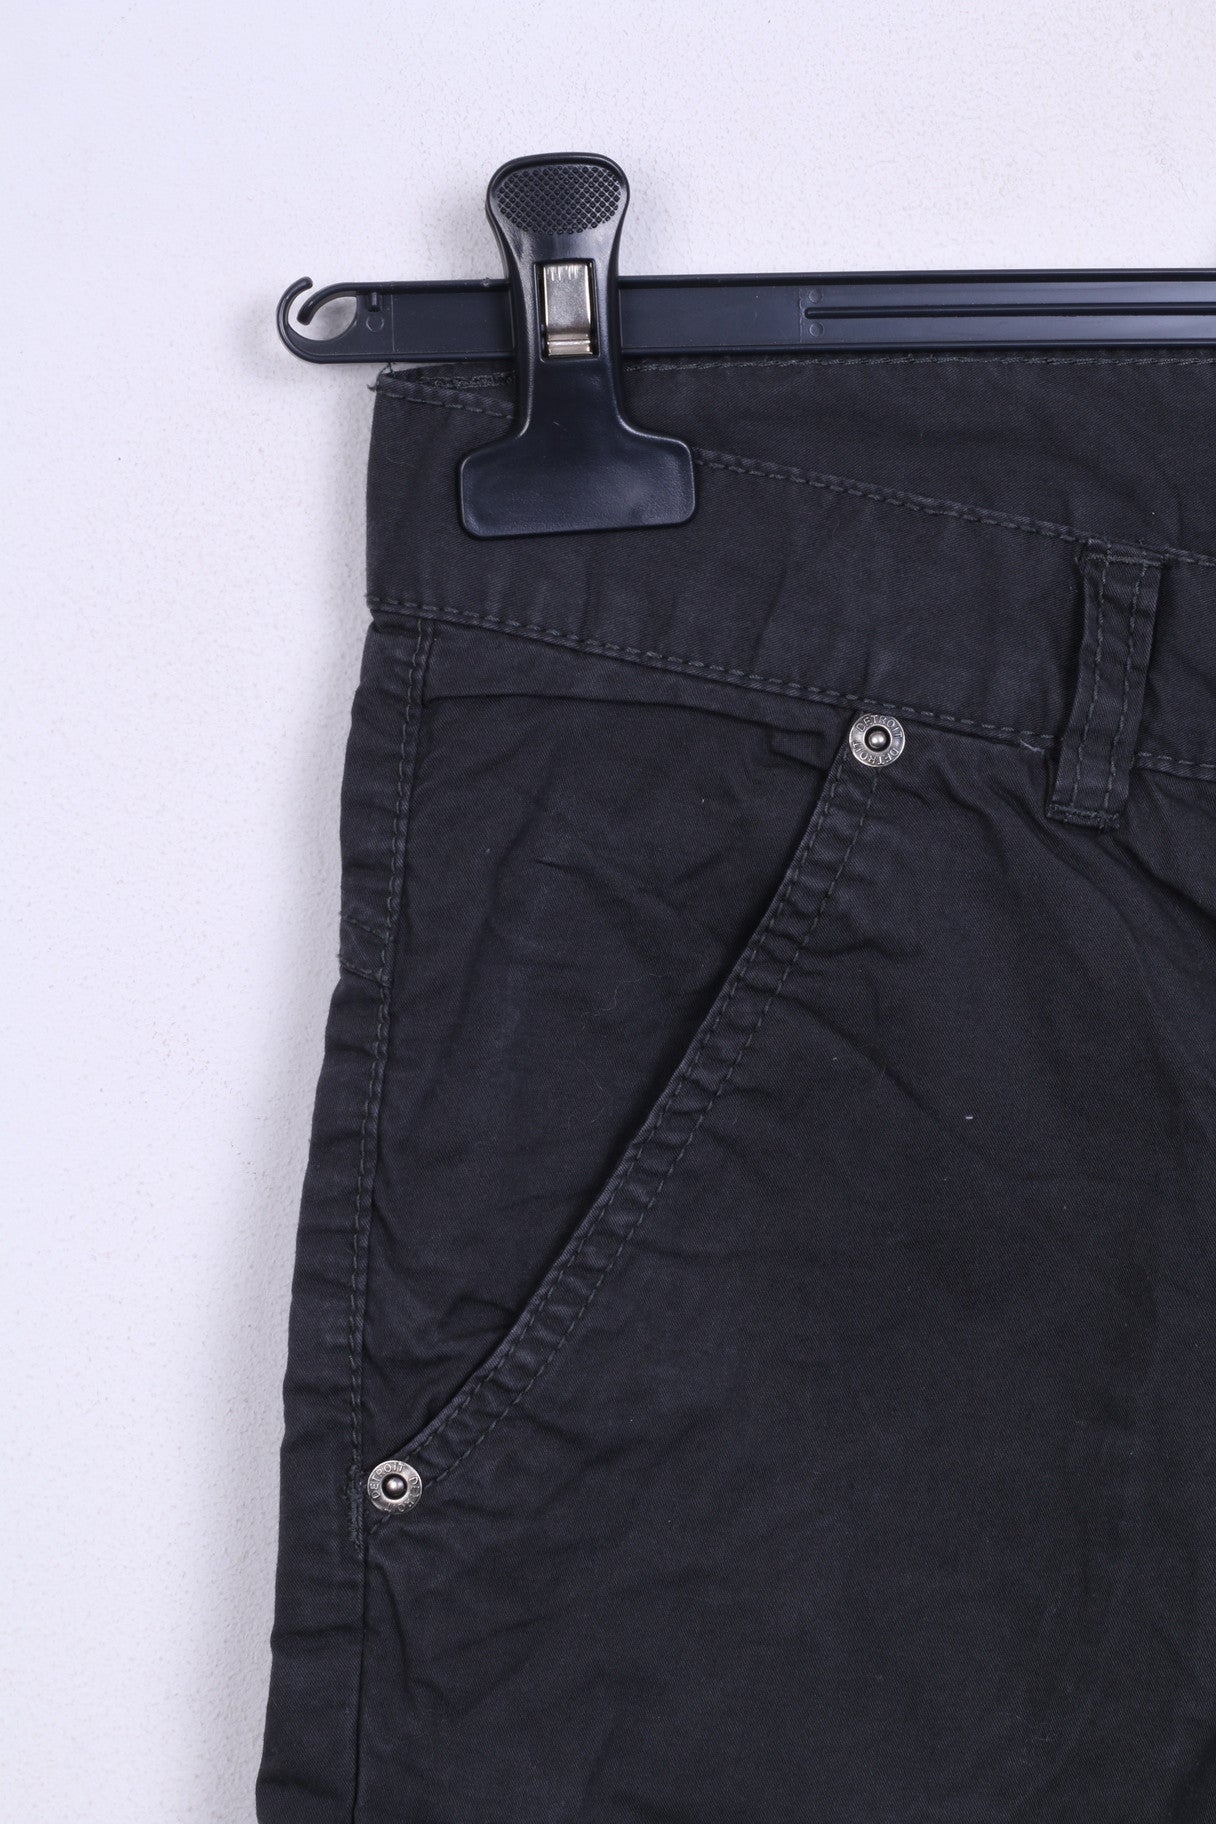 Detroit Boys 164 Black Capri Shorts Cotton Casual Trousers